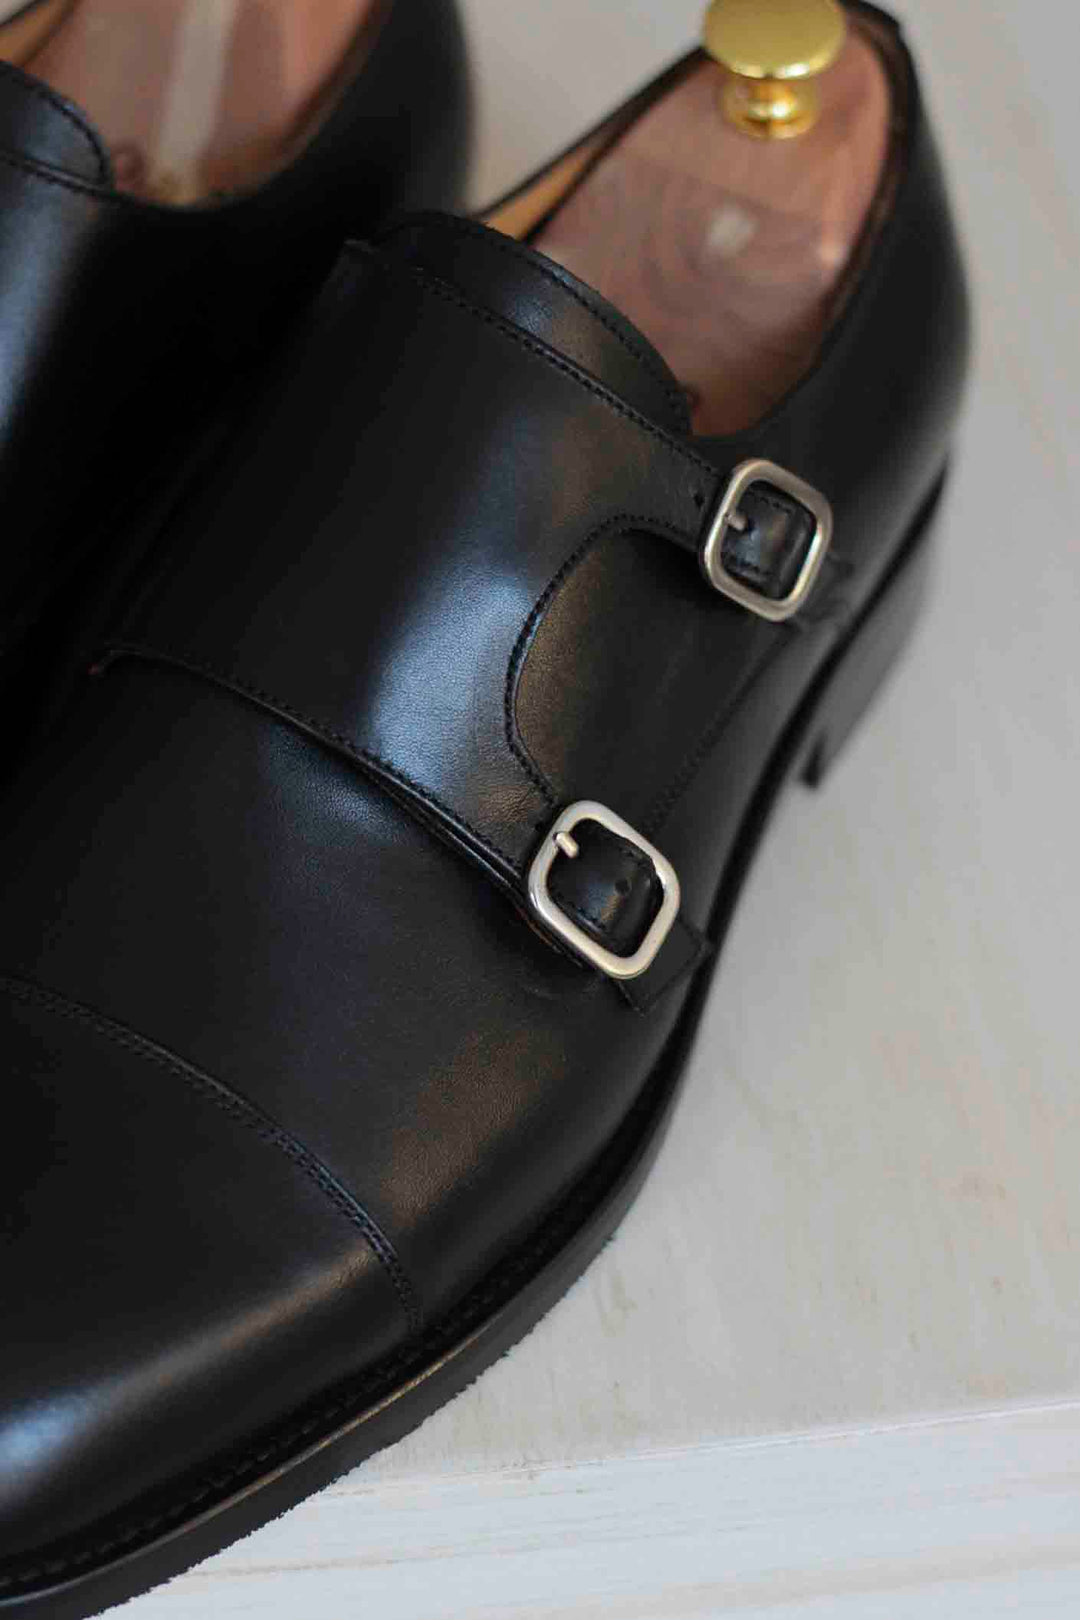 Boxcalf Black Double Buckle Shoe